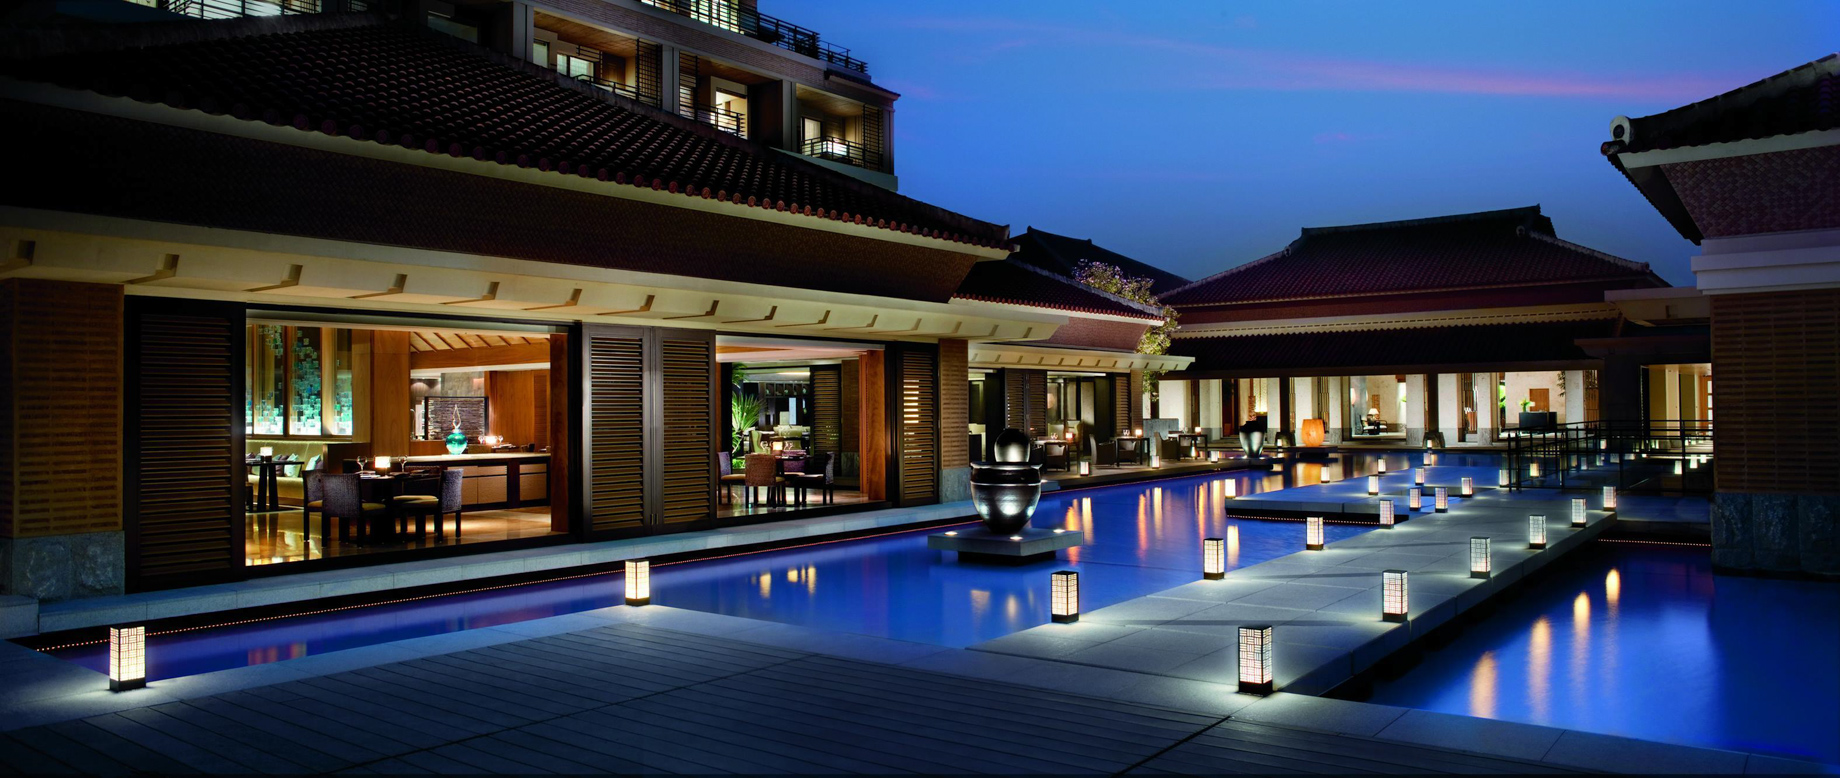 The Ritz-Carlton, Okinawa Hotel – Okinawa, Japan – Exterior Courtyard Night